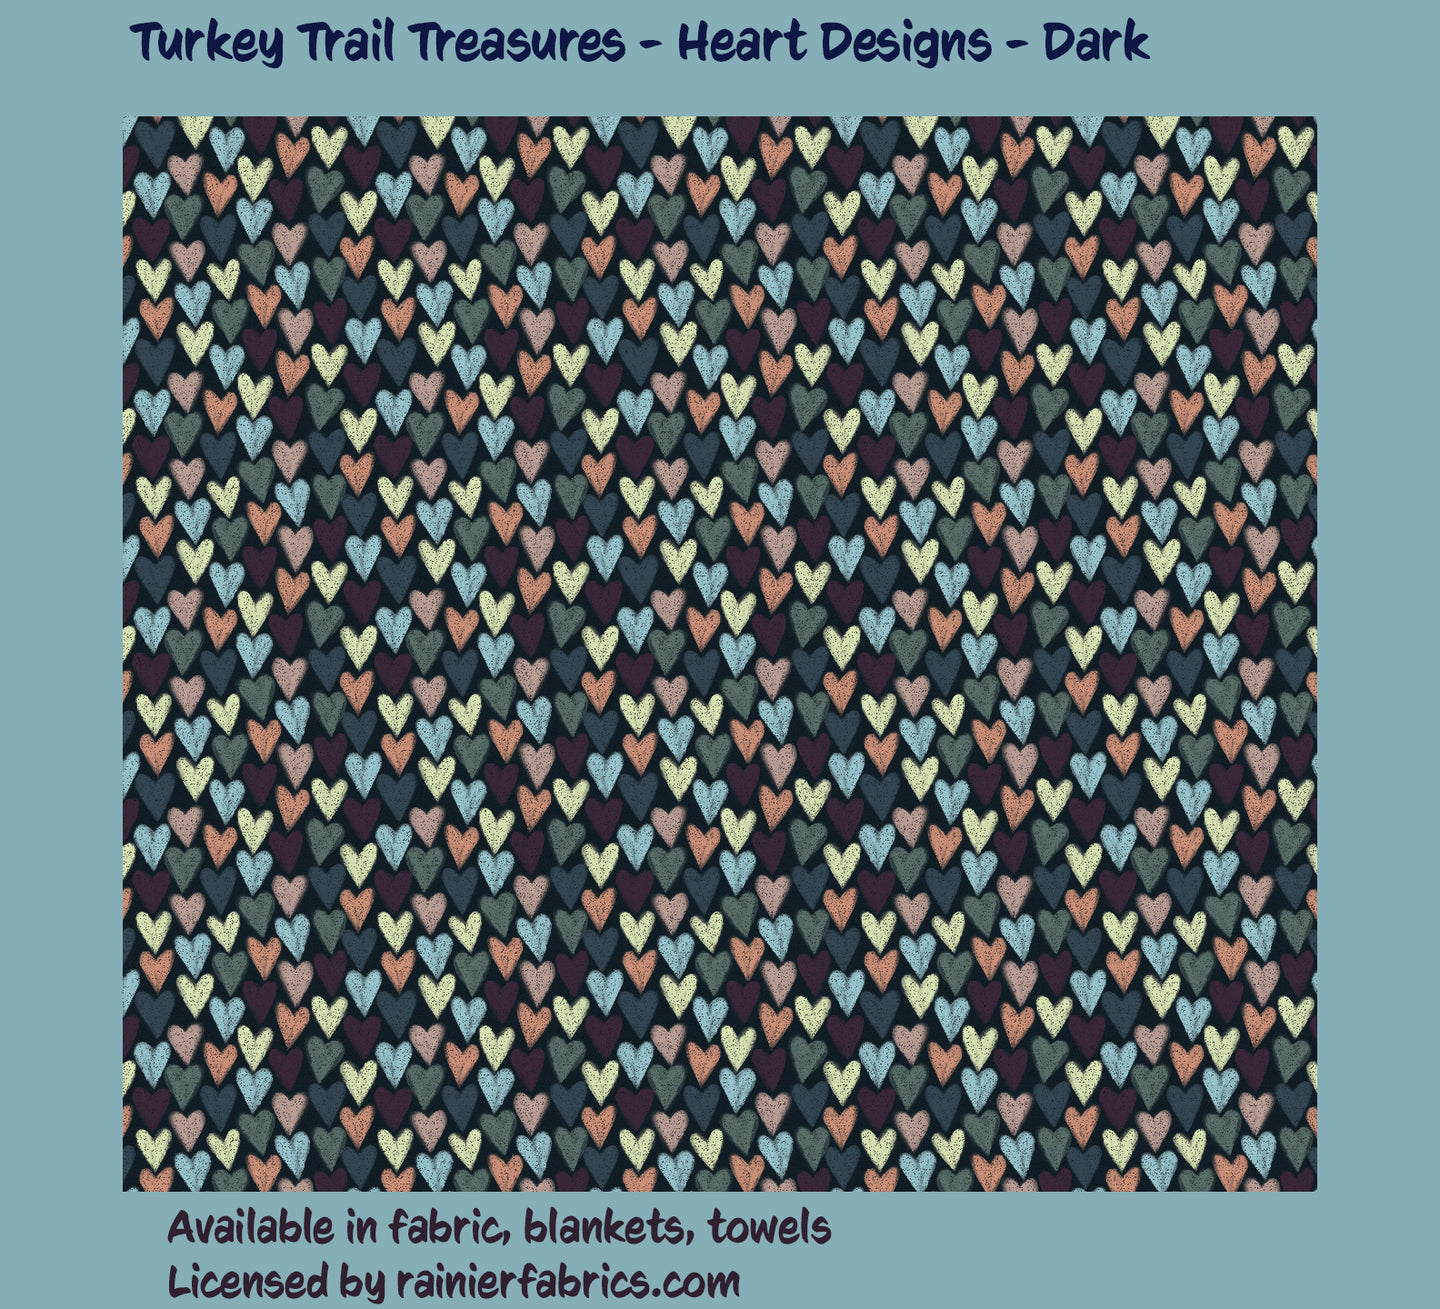 Heart Design - Dark from Turkey Trail Treasures - 2-5 day turnaround - Order by 1/2 yard; Description of bases below